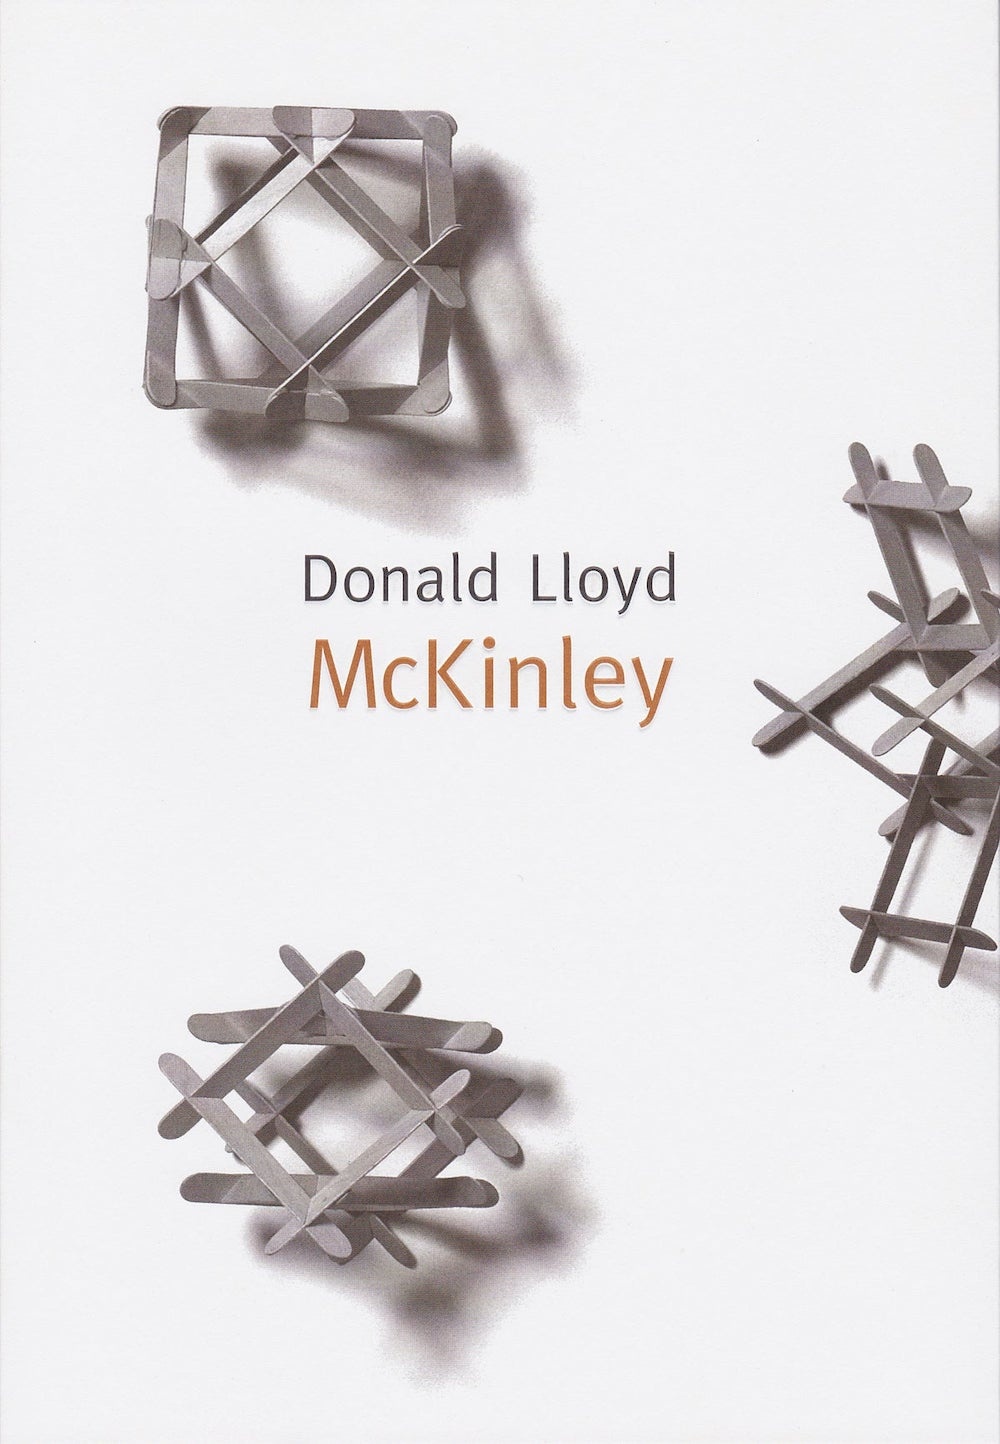 Donald Lloyd McKinley